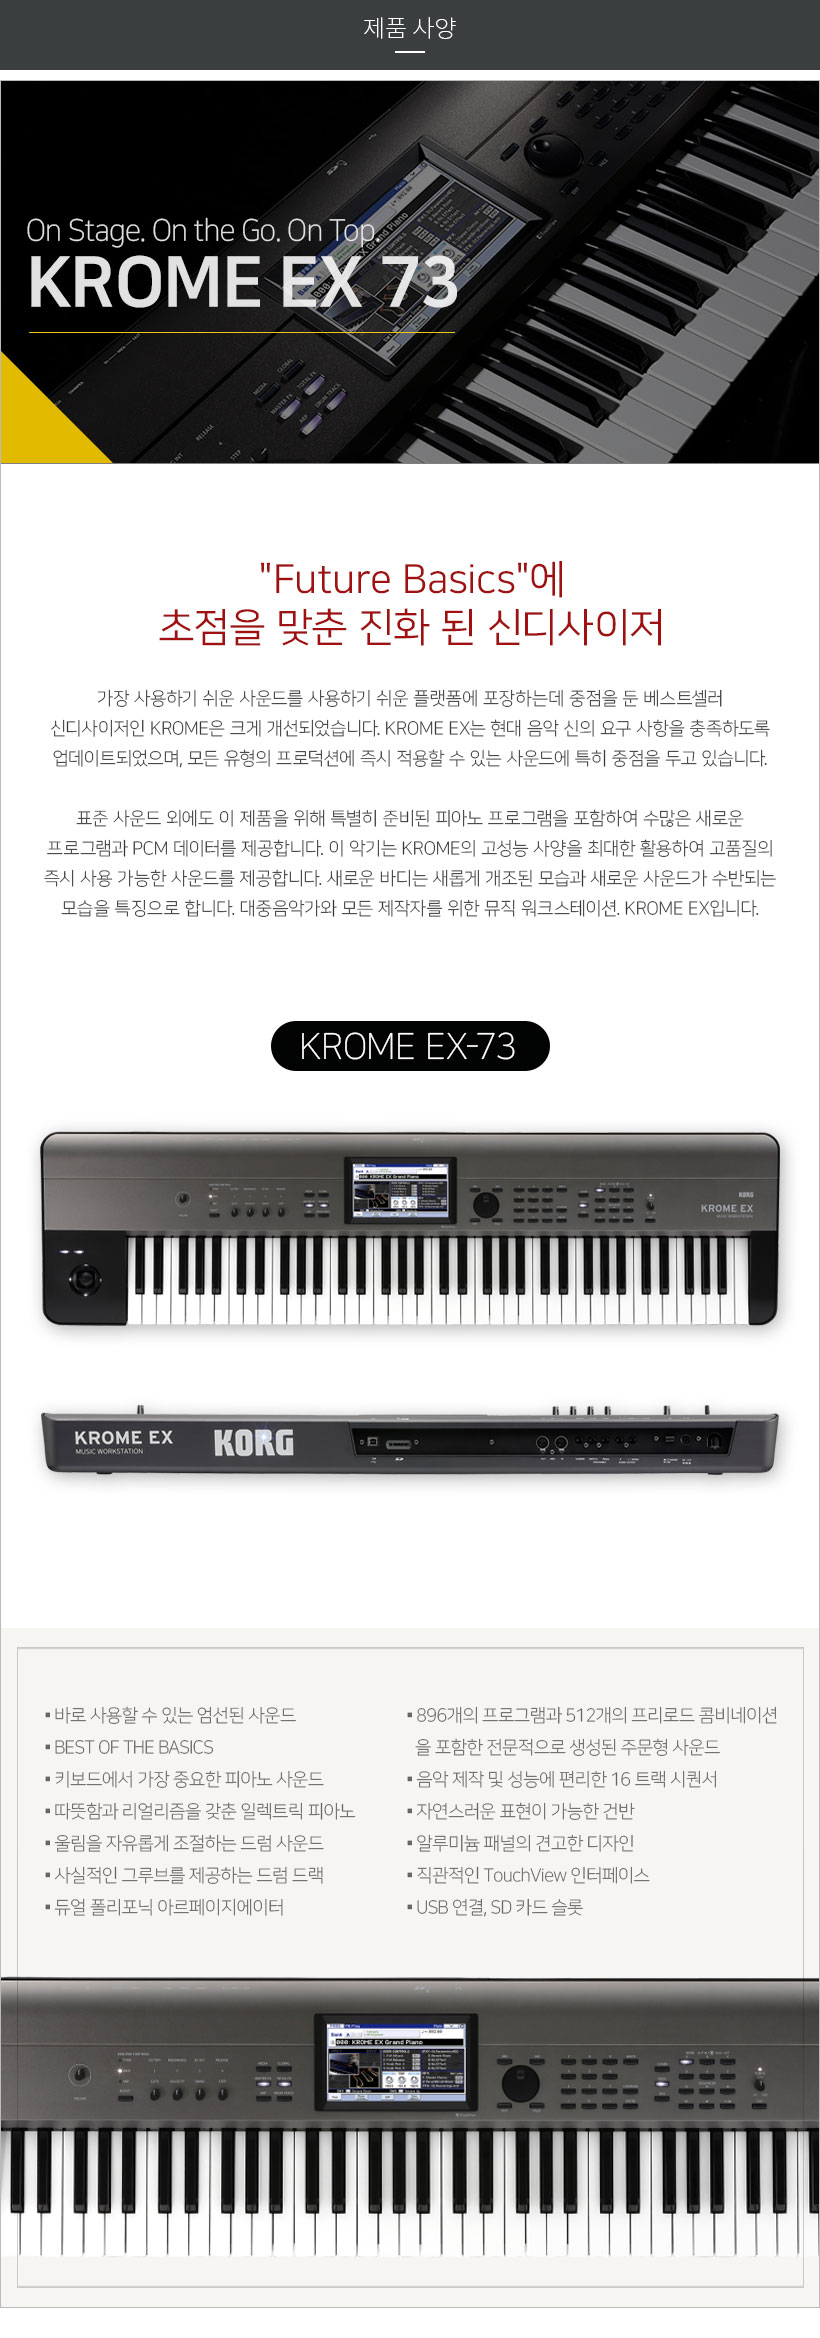 KROME EX73 제품 사양